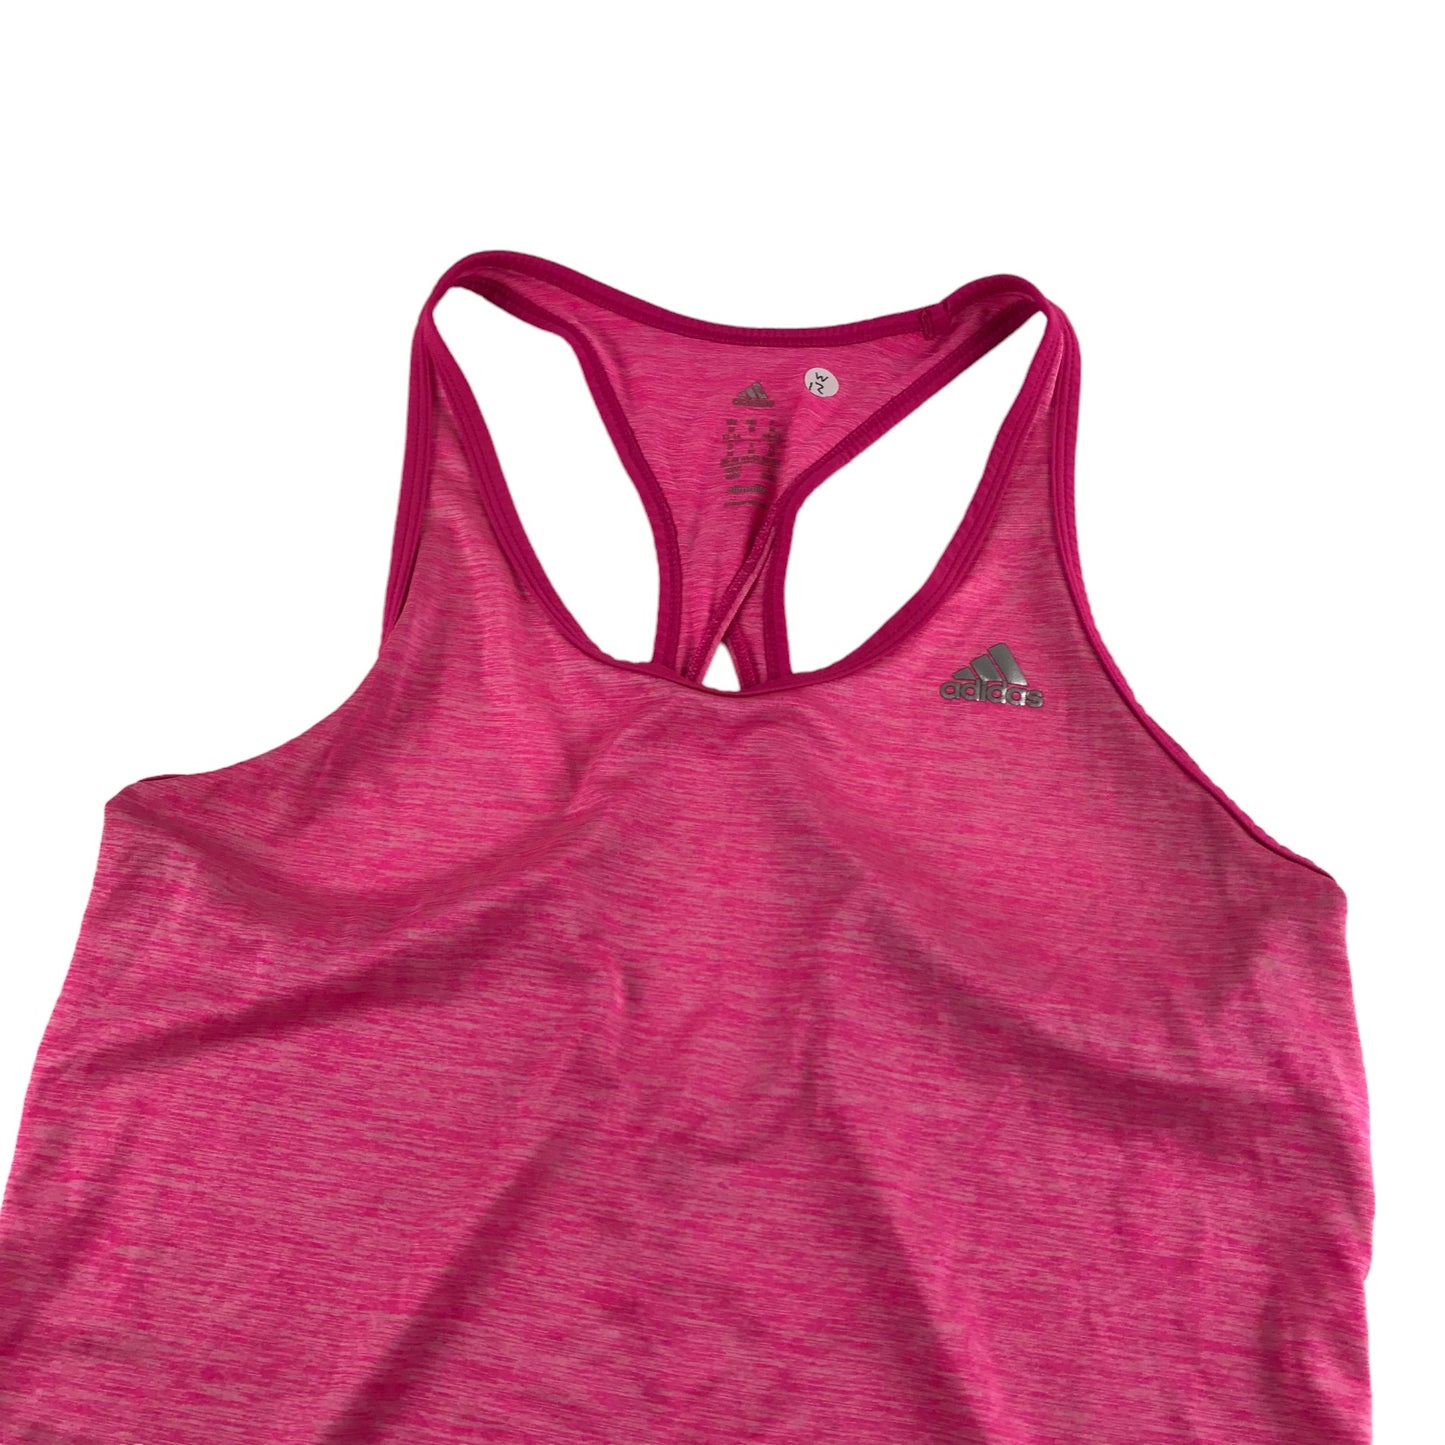 Adidas Sports Top Size Medium Women's 12-14 Pink Tank Top Climalite